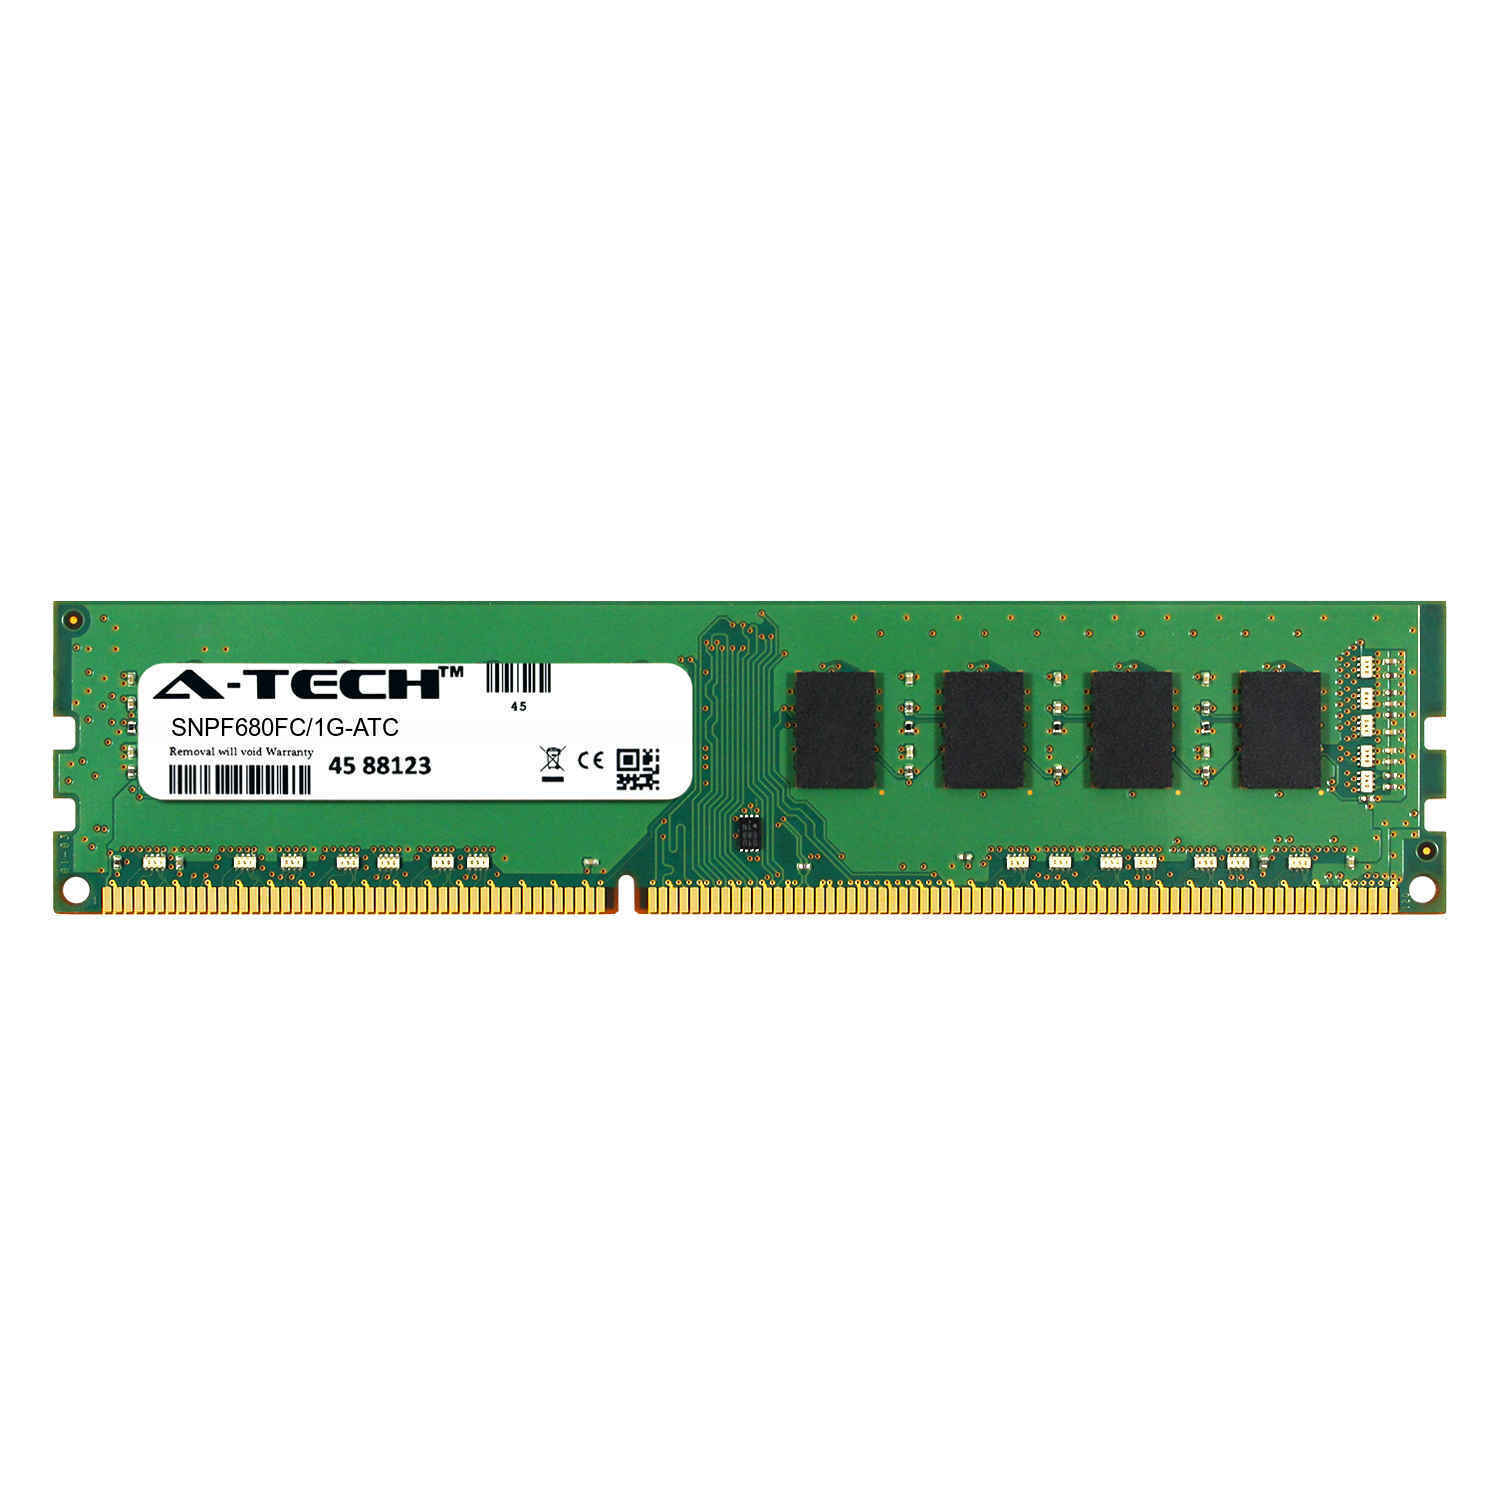 1GB DDR3 PC3-8500 1066MHz DIMM (Dell SNPF680FC/1G Equivalent) Memory RAM